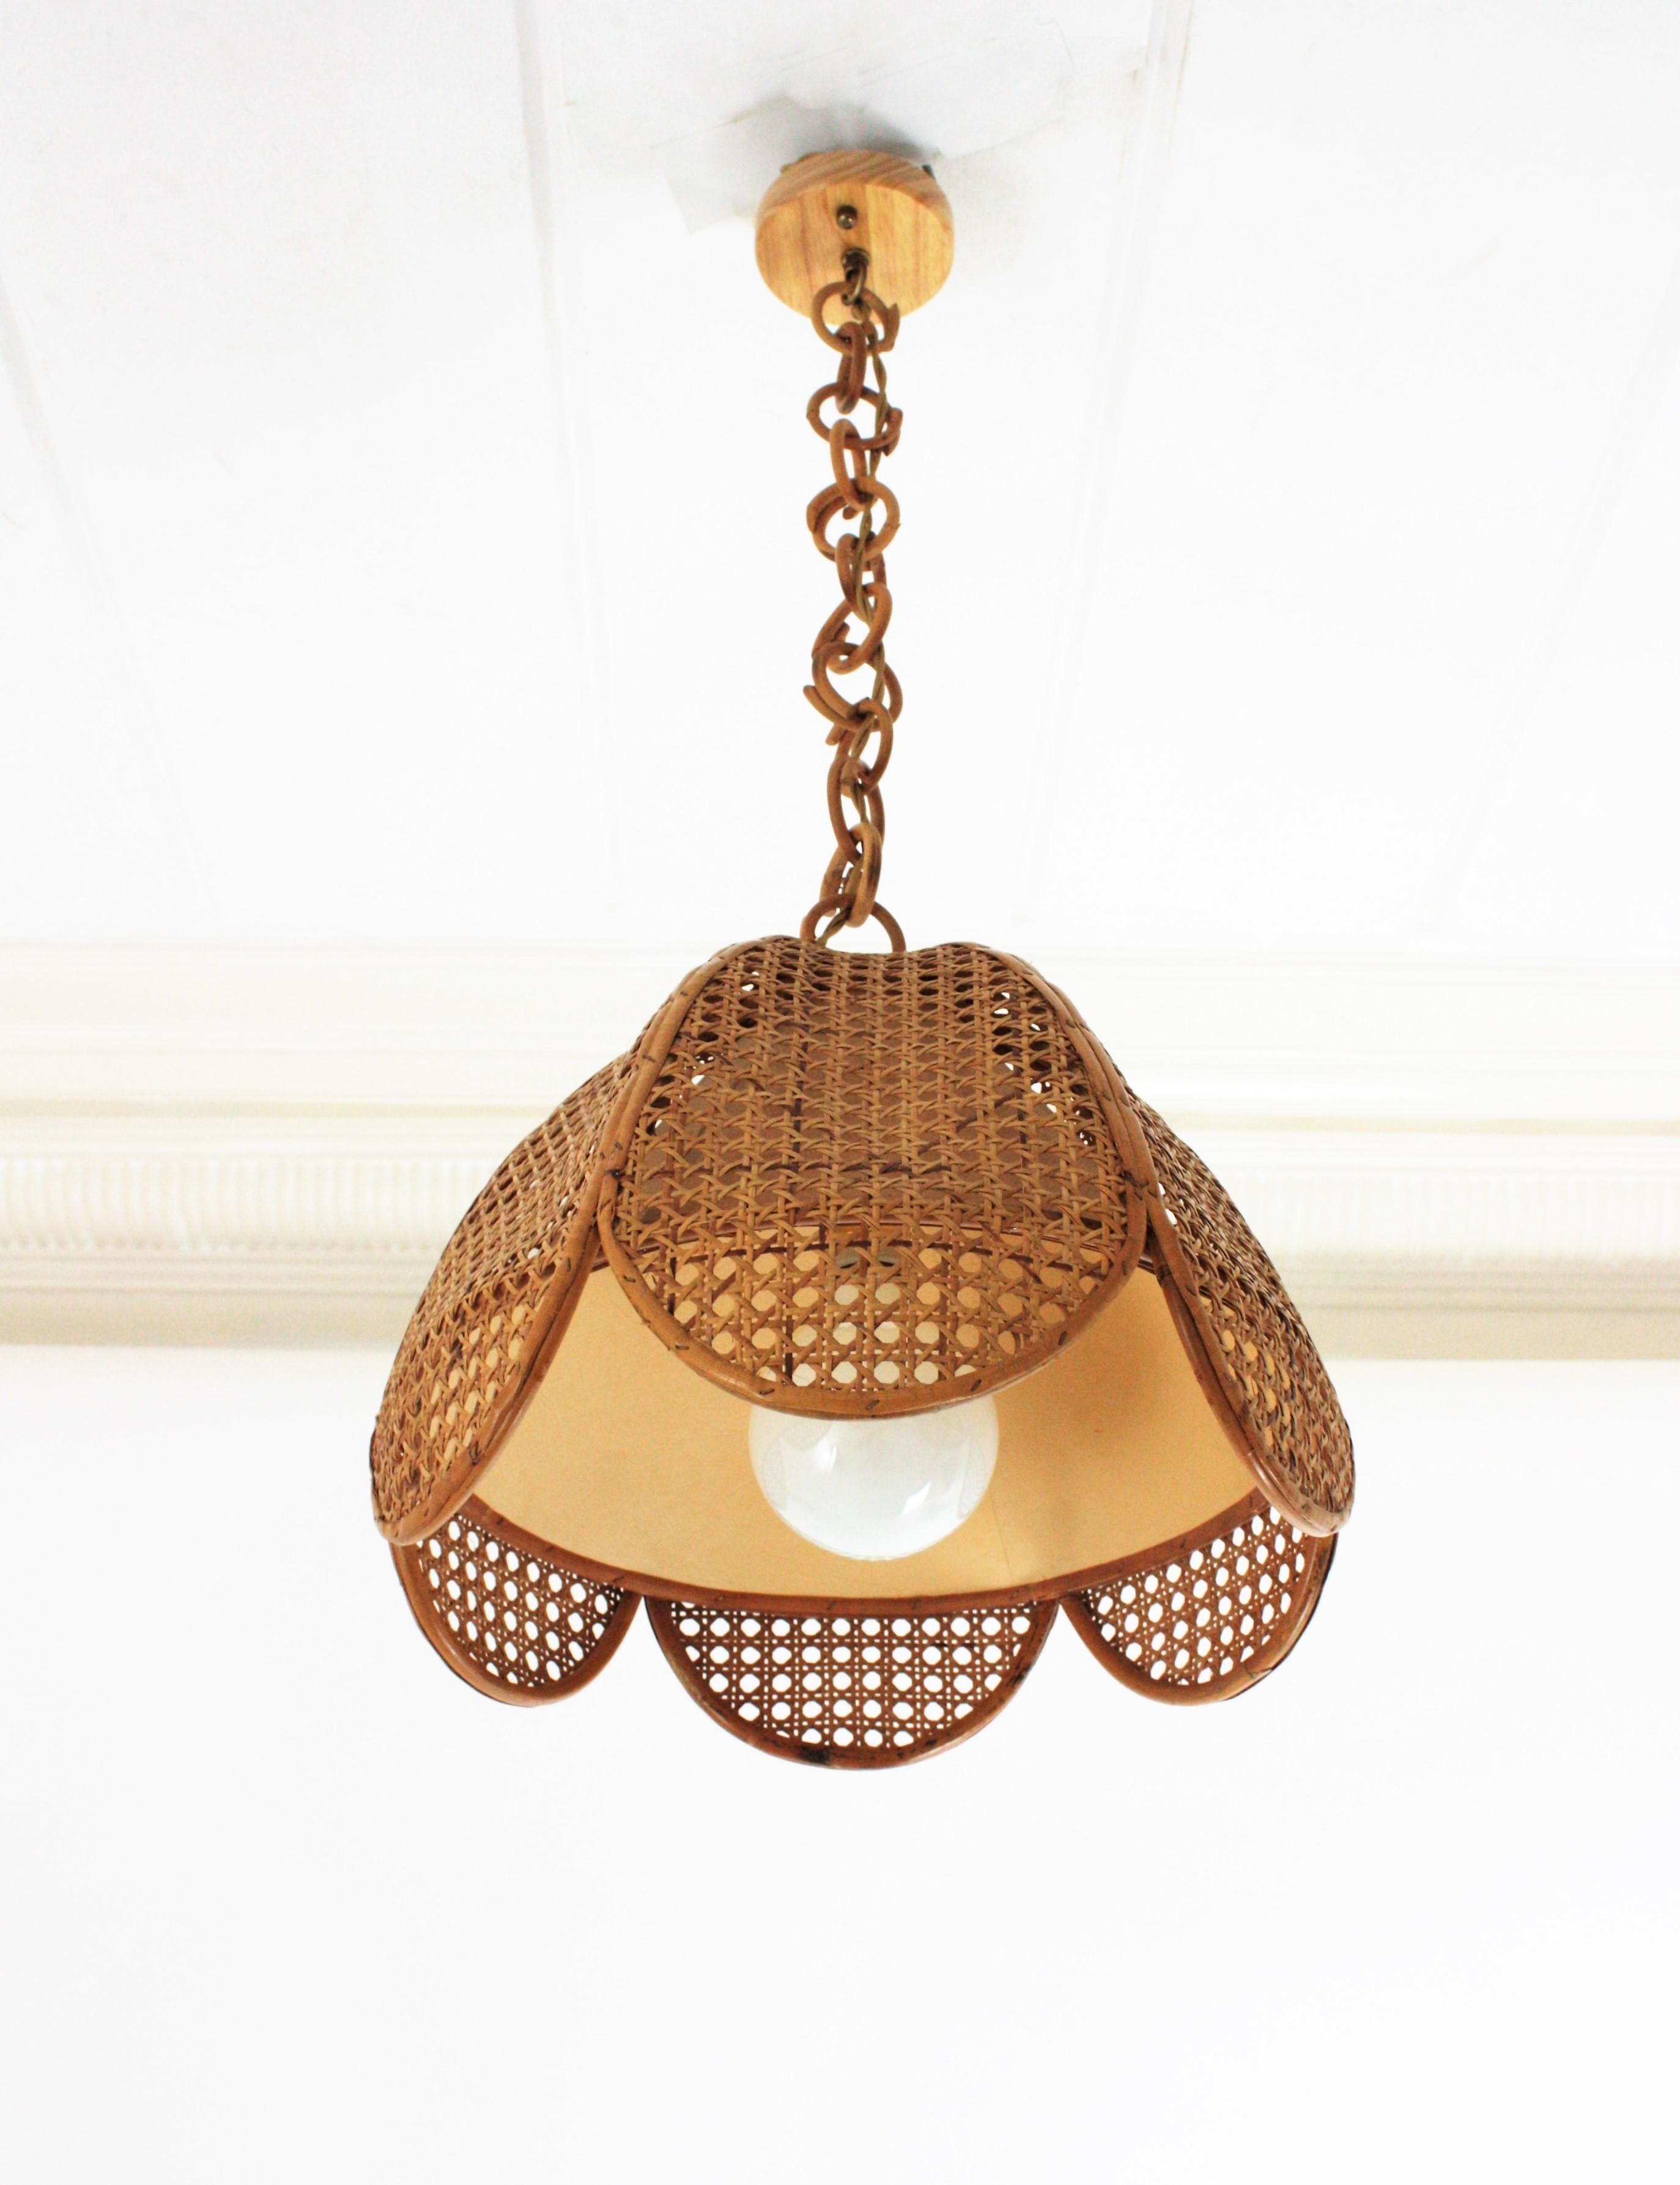 20th Century Spanish Modernist Woven Wicker Rattan Palm Pendant Light, 1960s For Sale